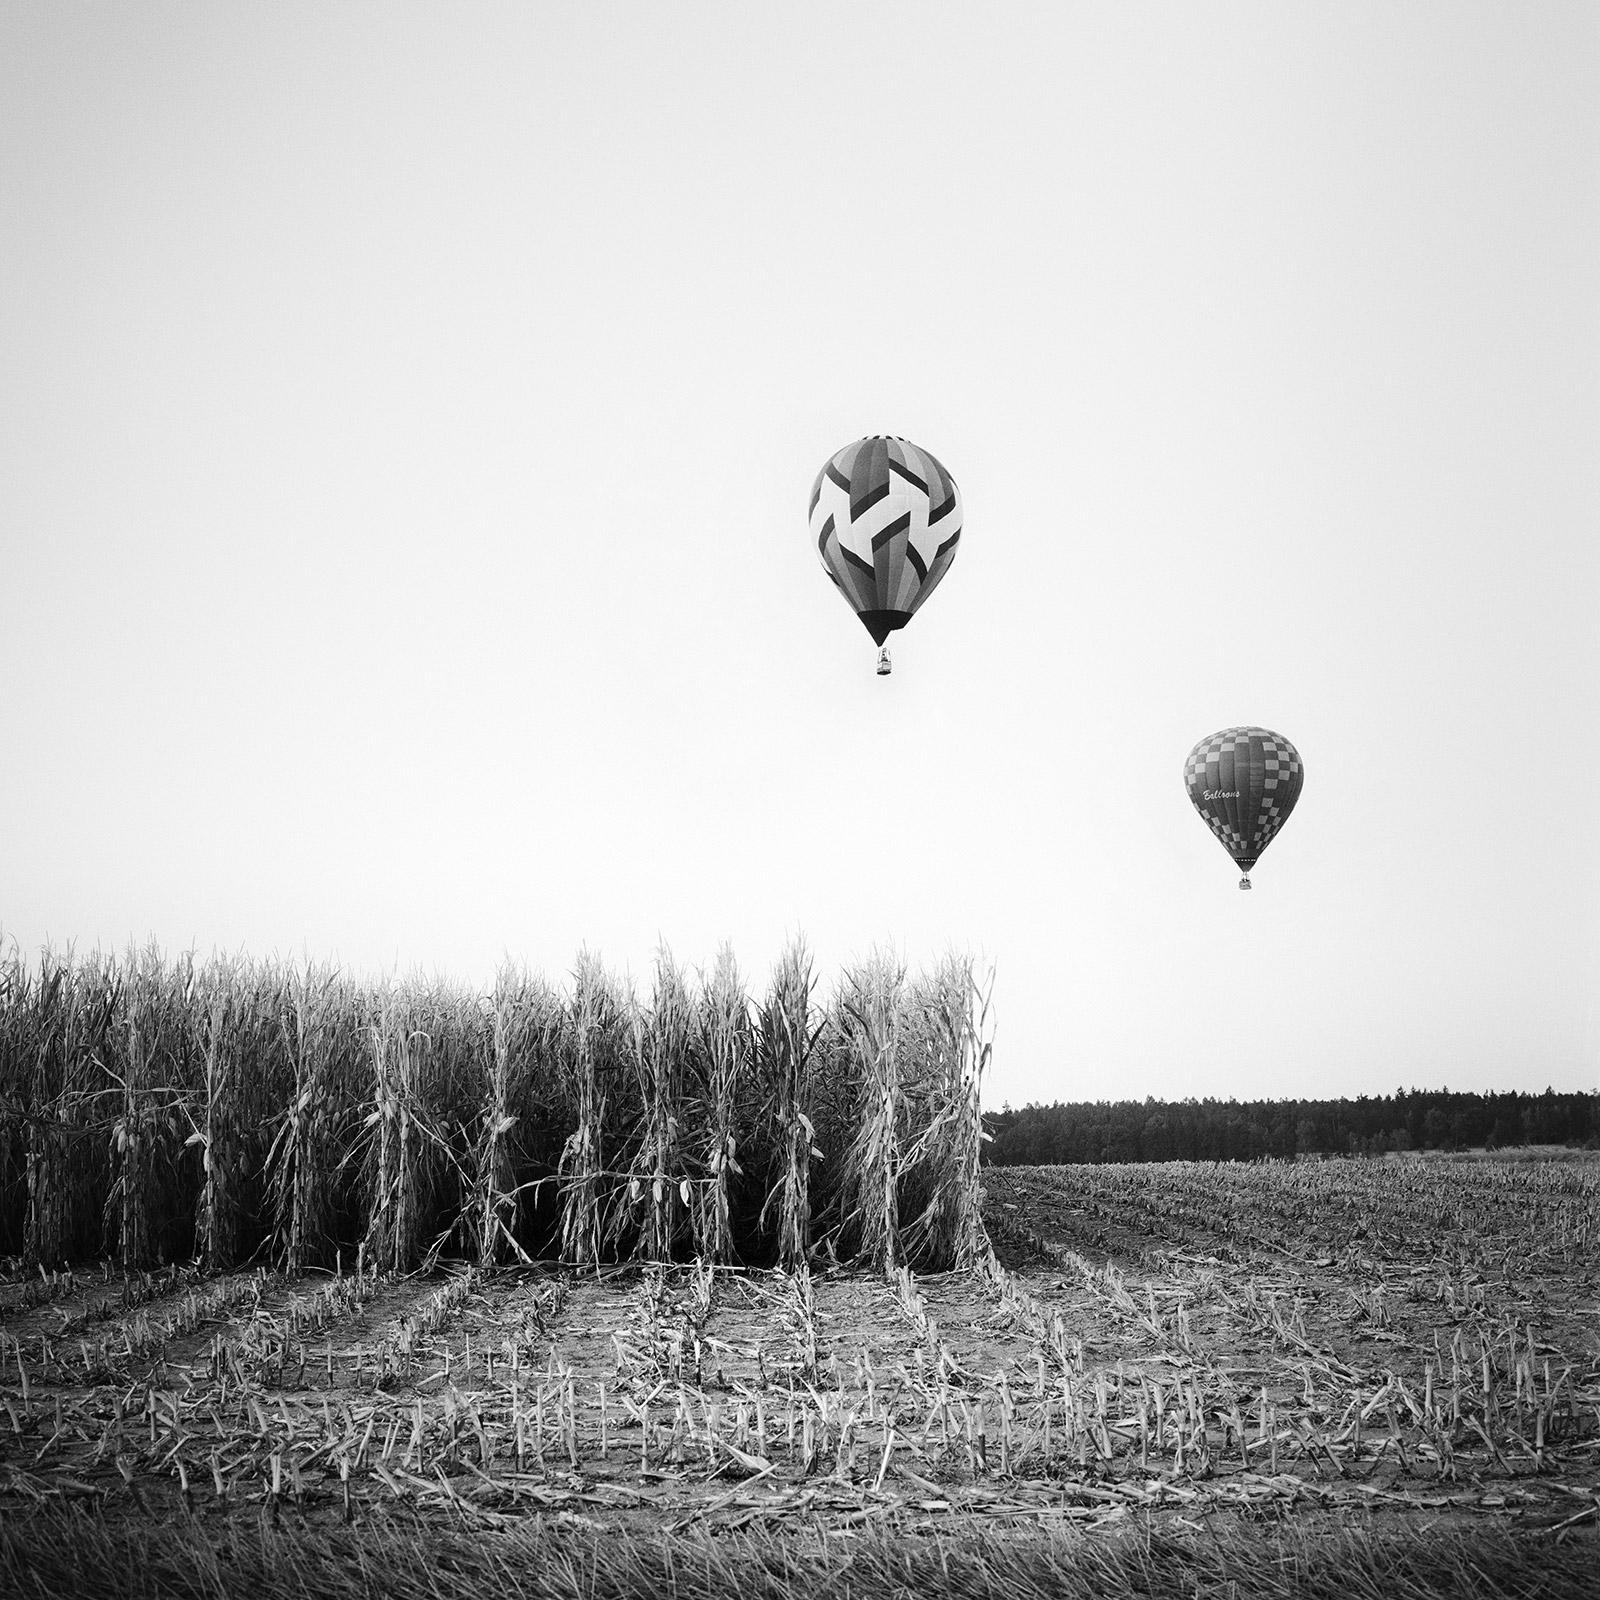 Gerald Berghammer Landscape Photograph - Hot Air Balloon Championship Austria black white landscape fine art photography 